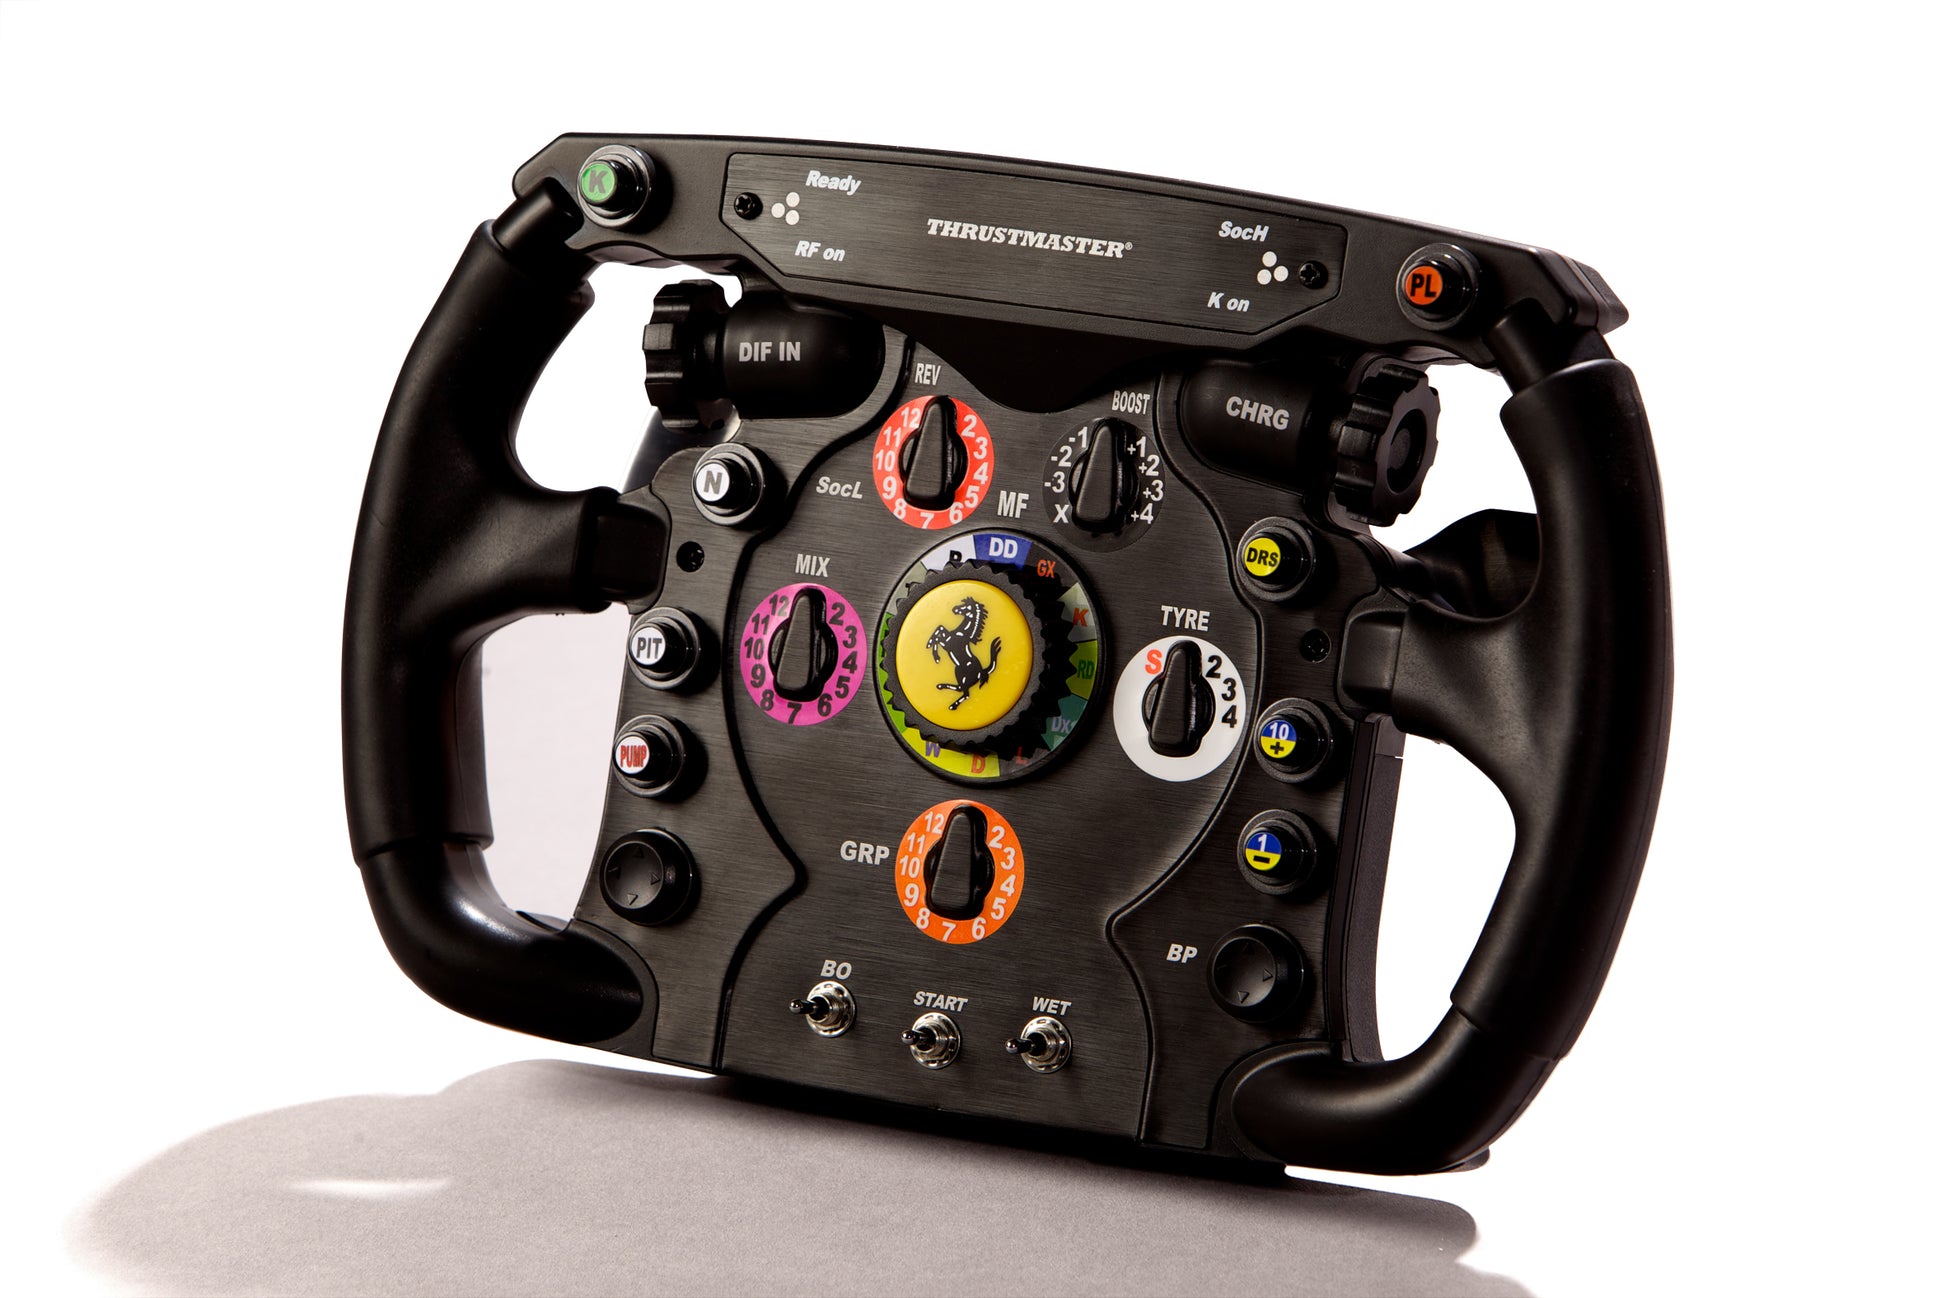 Thrustmaster Ferrari F1 Wheel Add-on - Sim Belgium : Simulateur voiture 